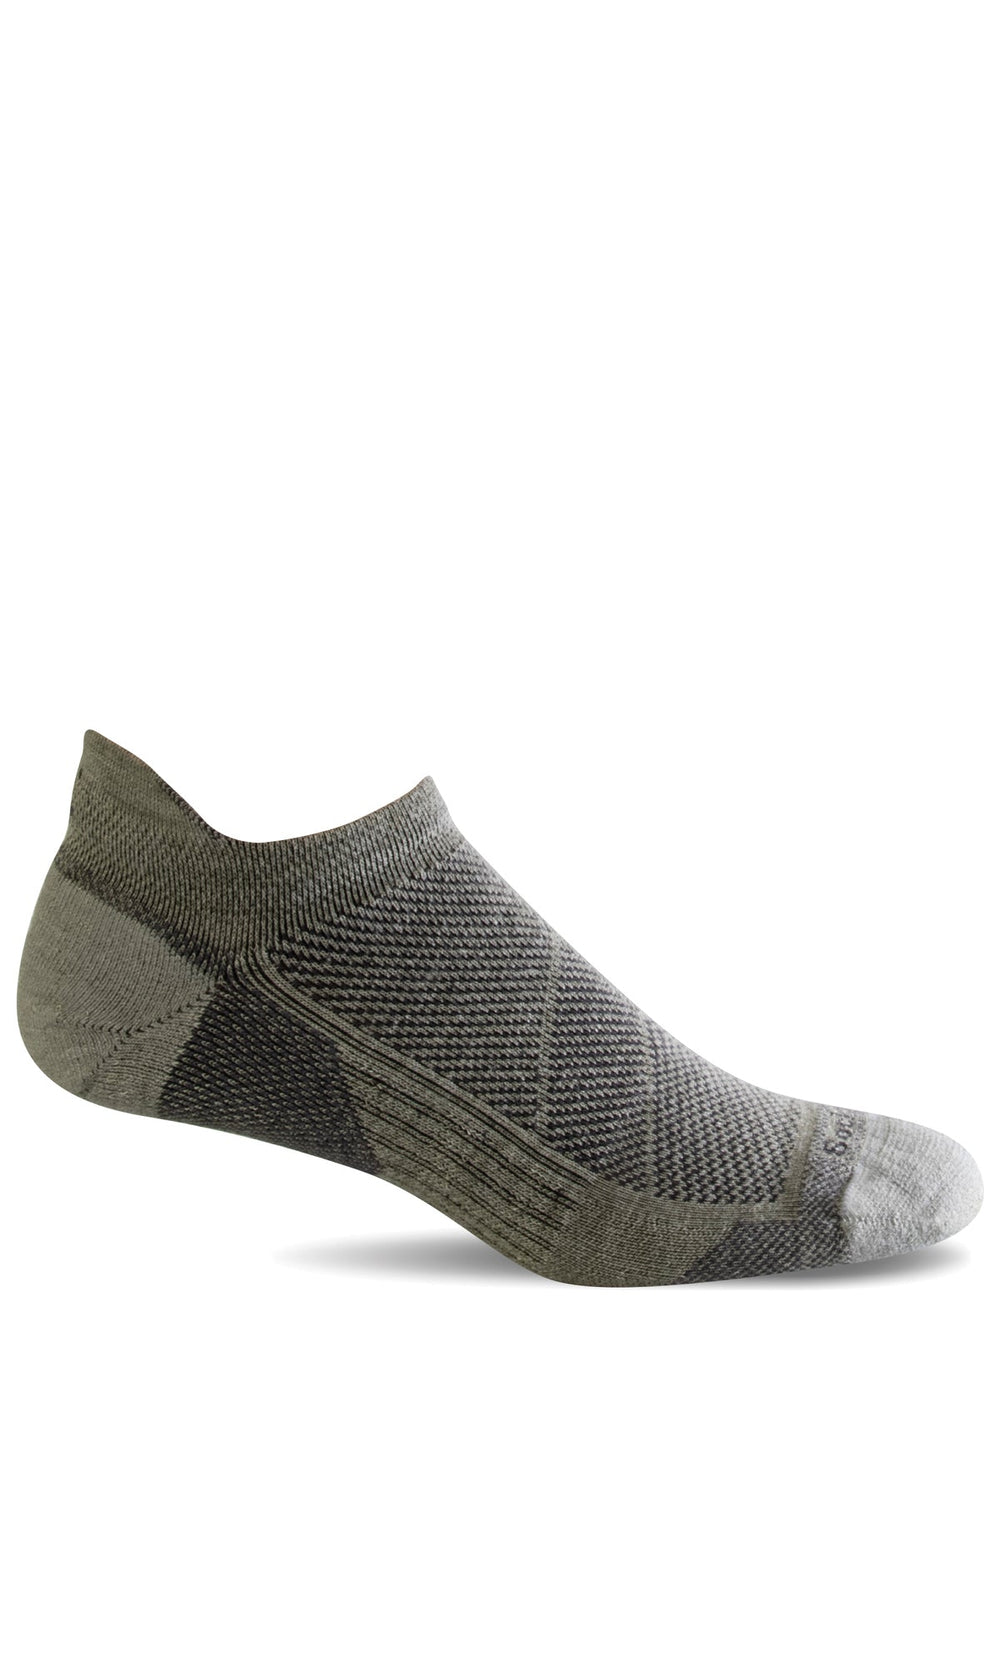 Sockwell Elevate Micro Moderate Compression Socks (Men's)